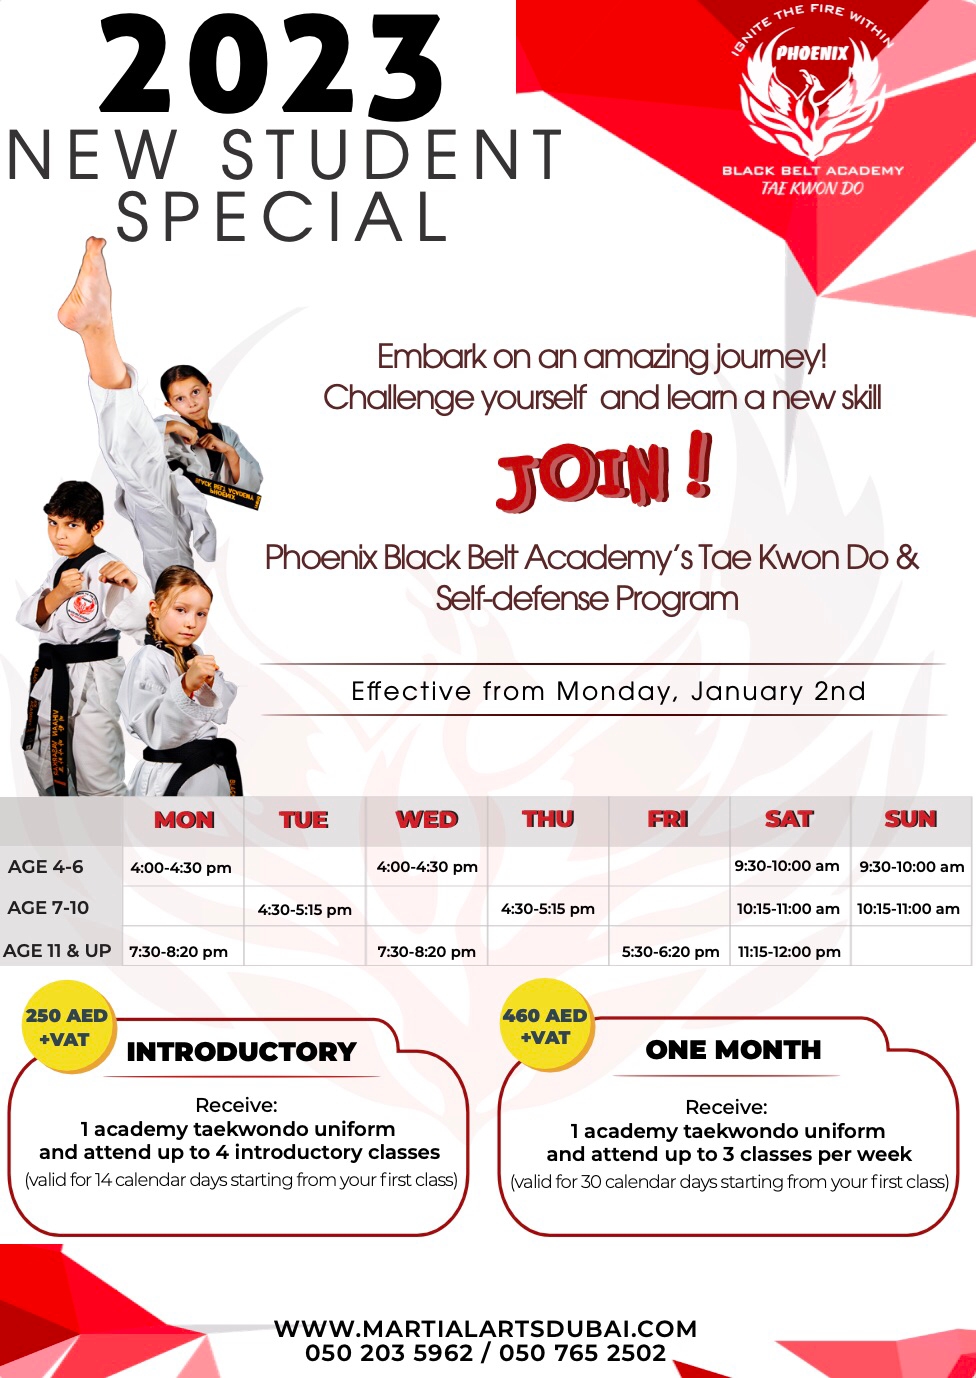 Dubai Martial Arts Phoenix Academy special offer kids activities Tae Kwon Do